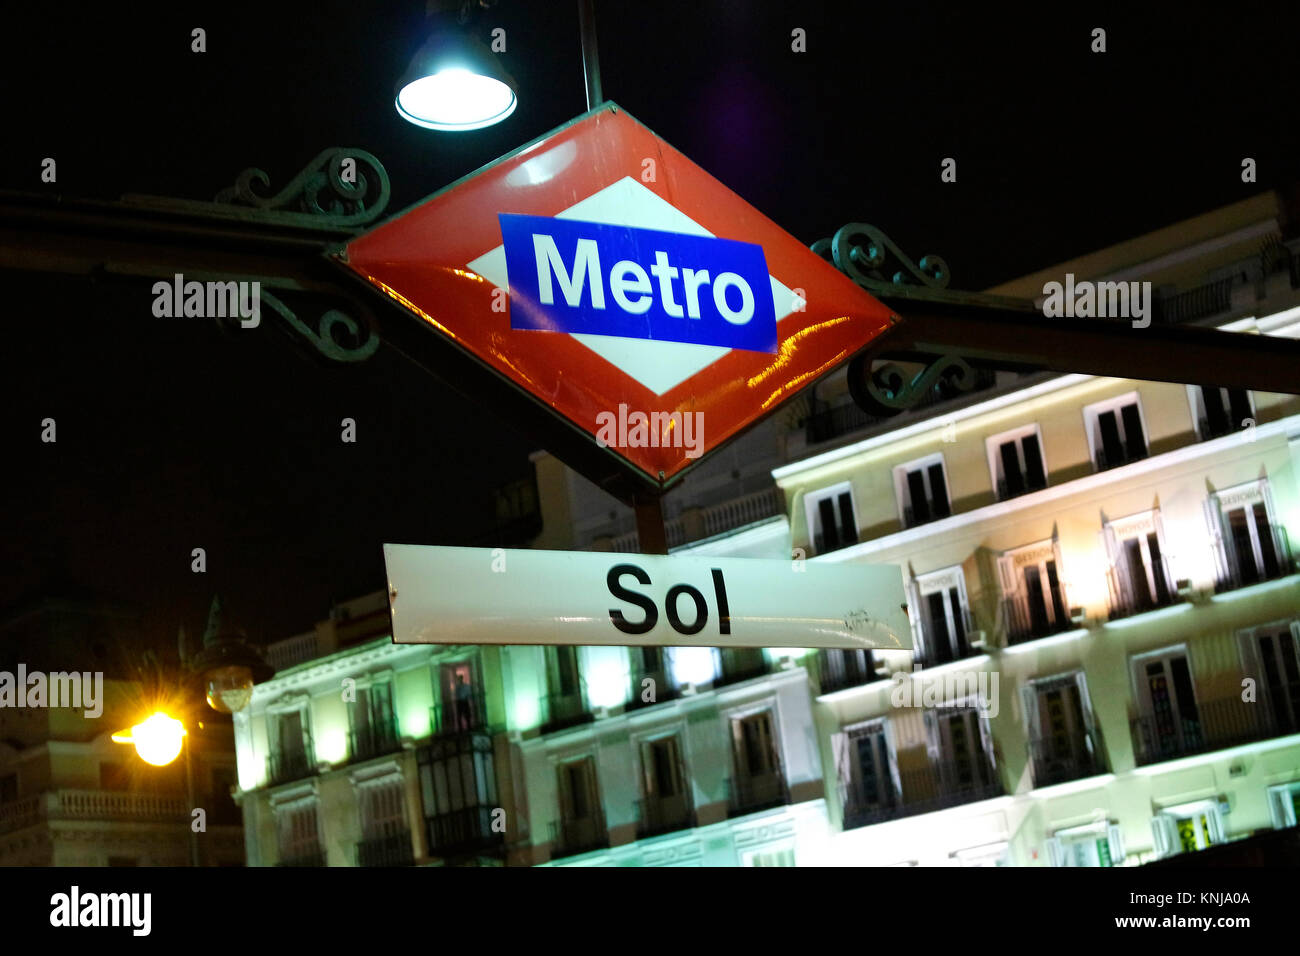 Puerta del Sol, Madrids. Stockfoto